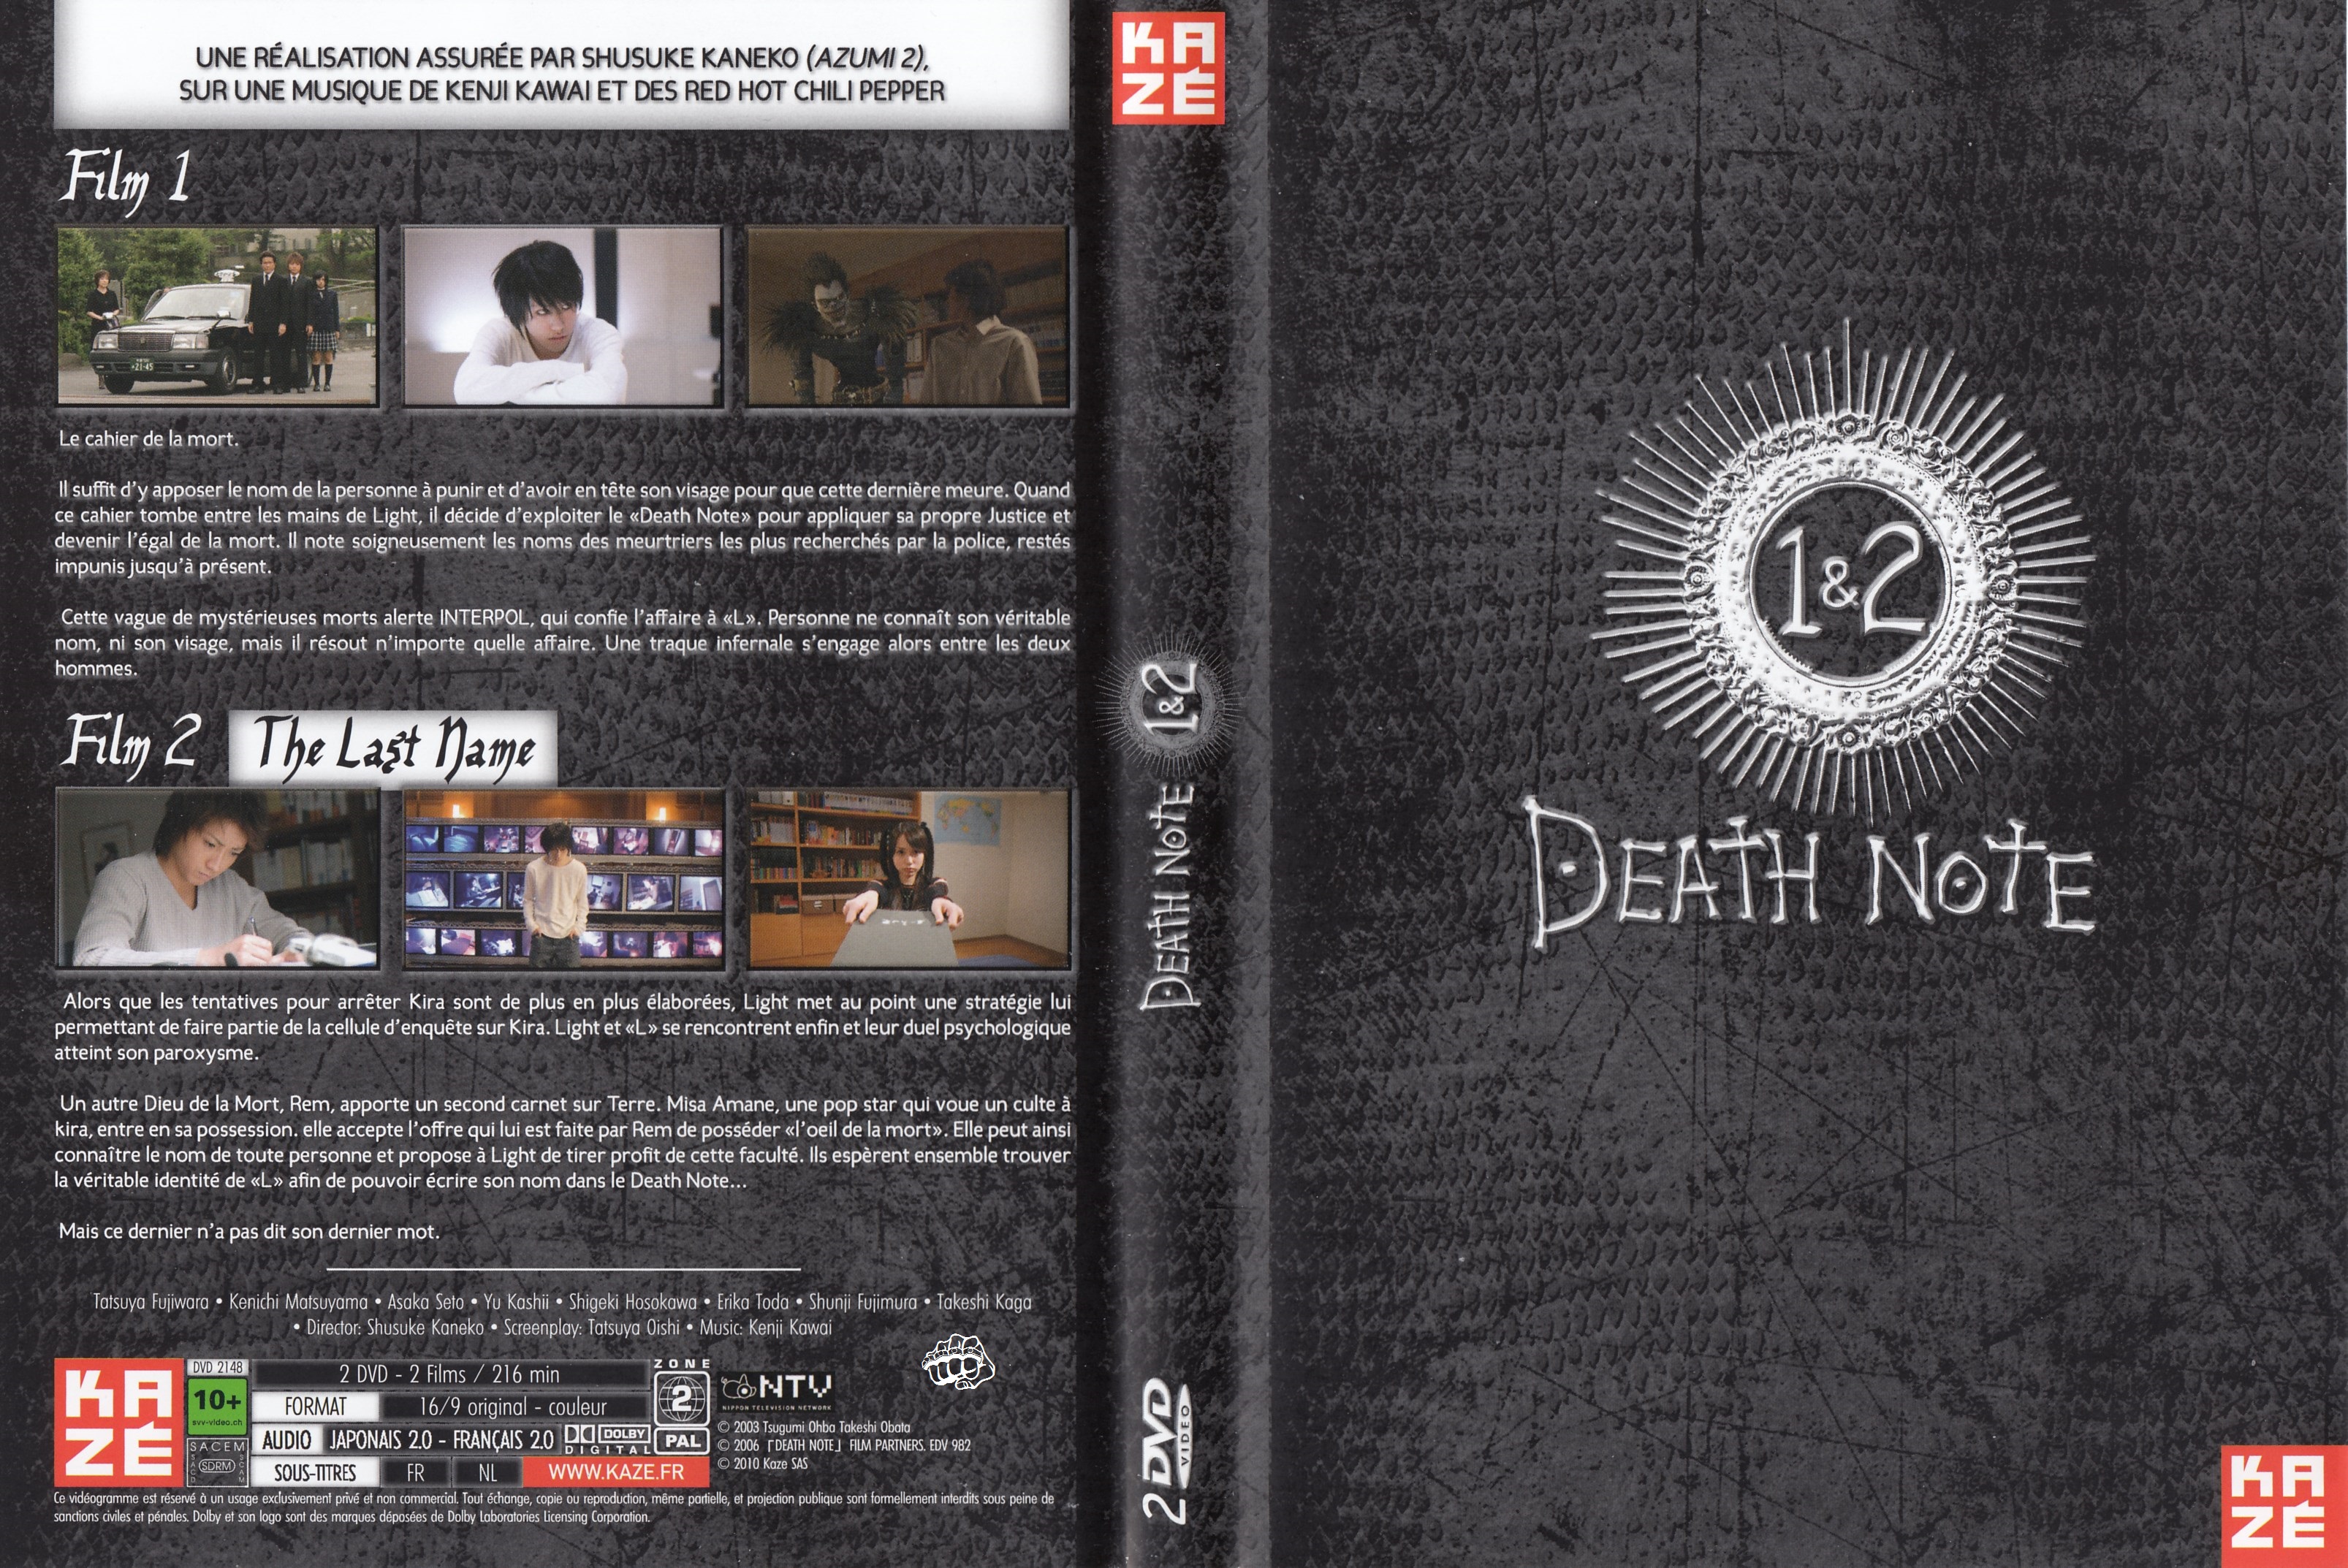 Jaquette DVD Death Note 1 & 2